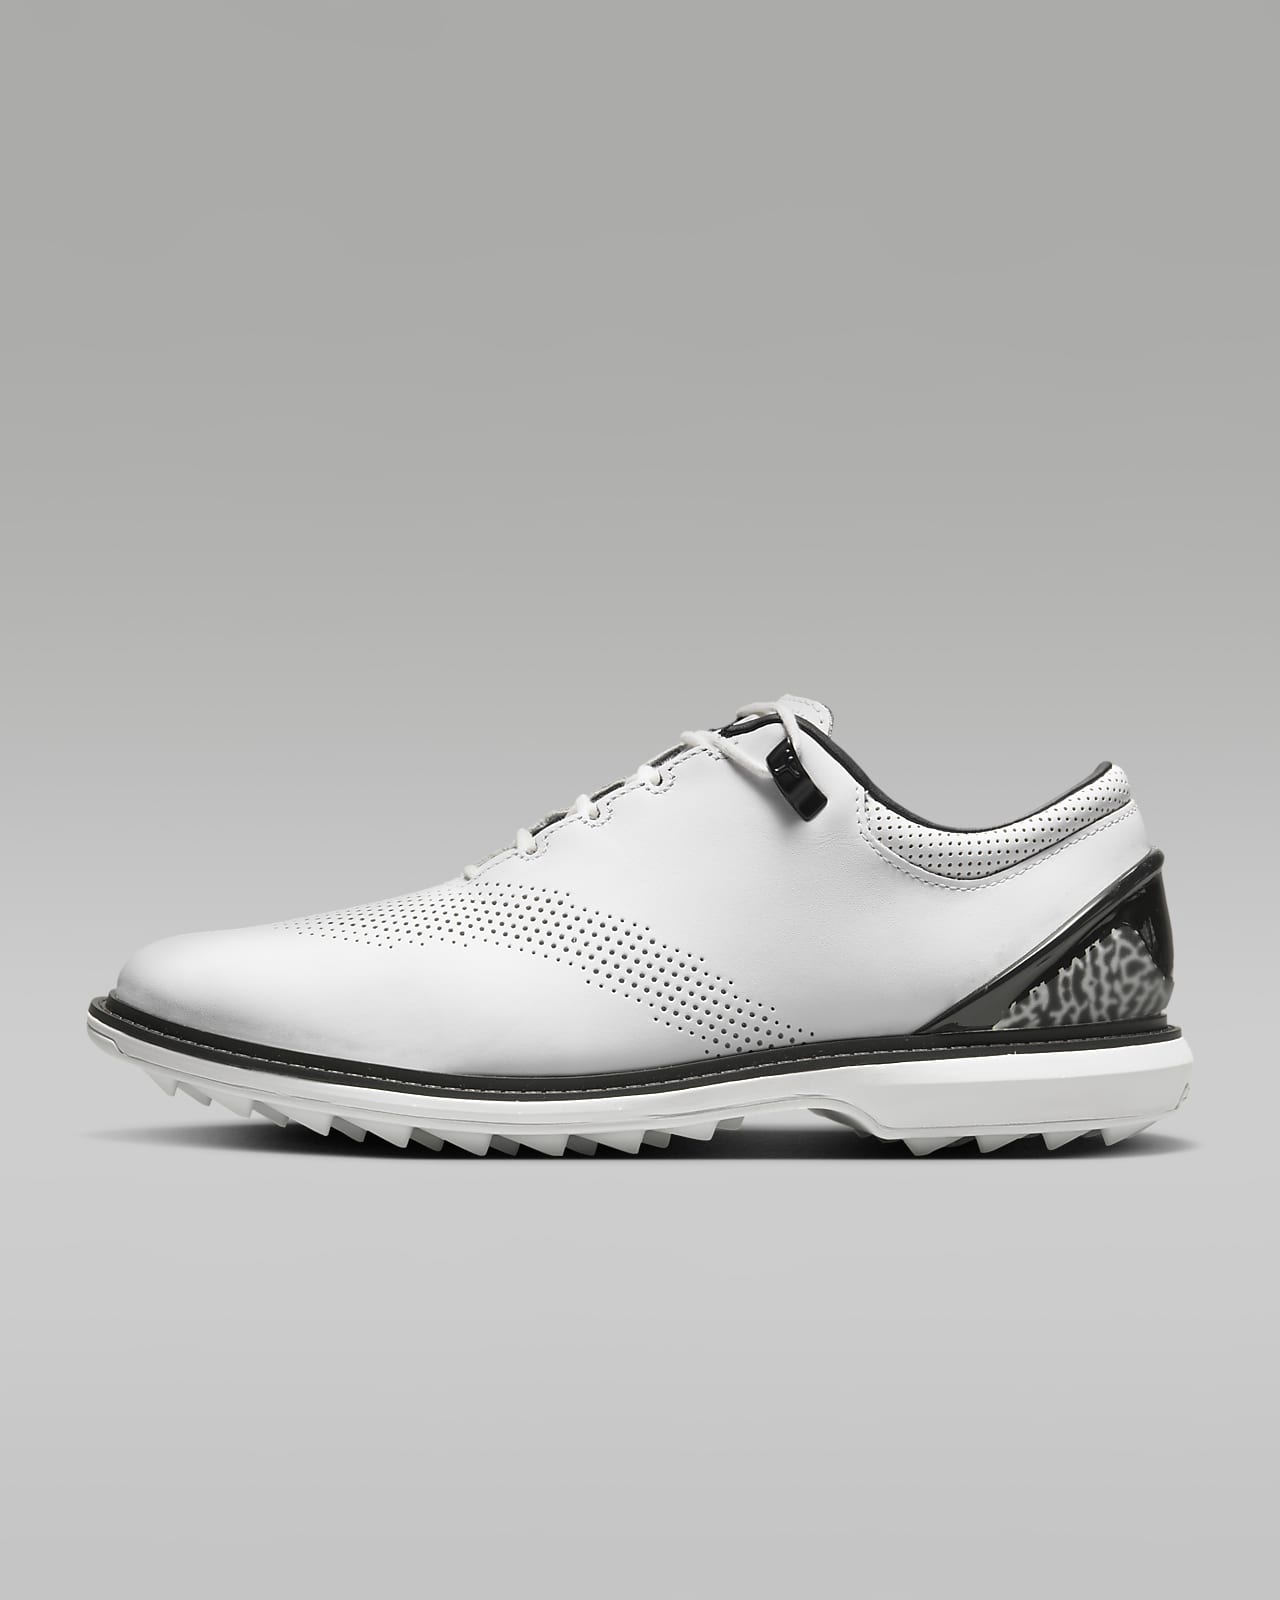 Jordan ADG 4 Golf Shoes with Golf Apparel